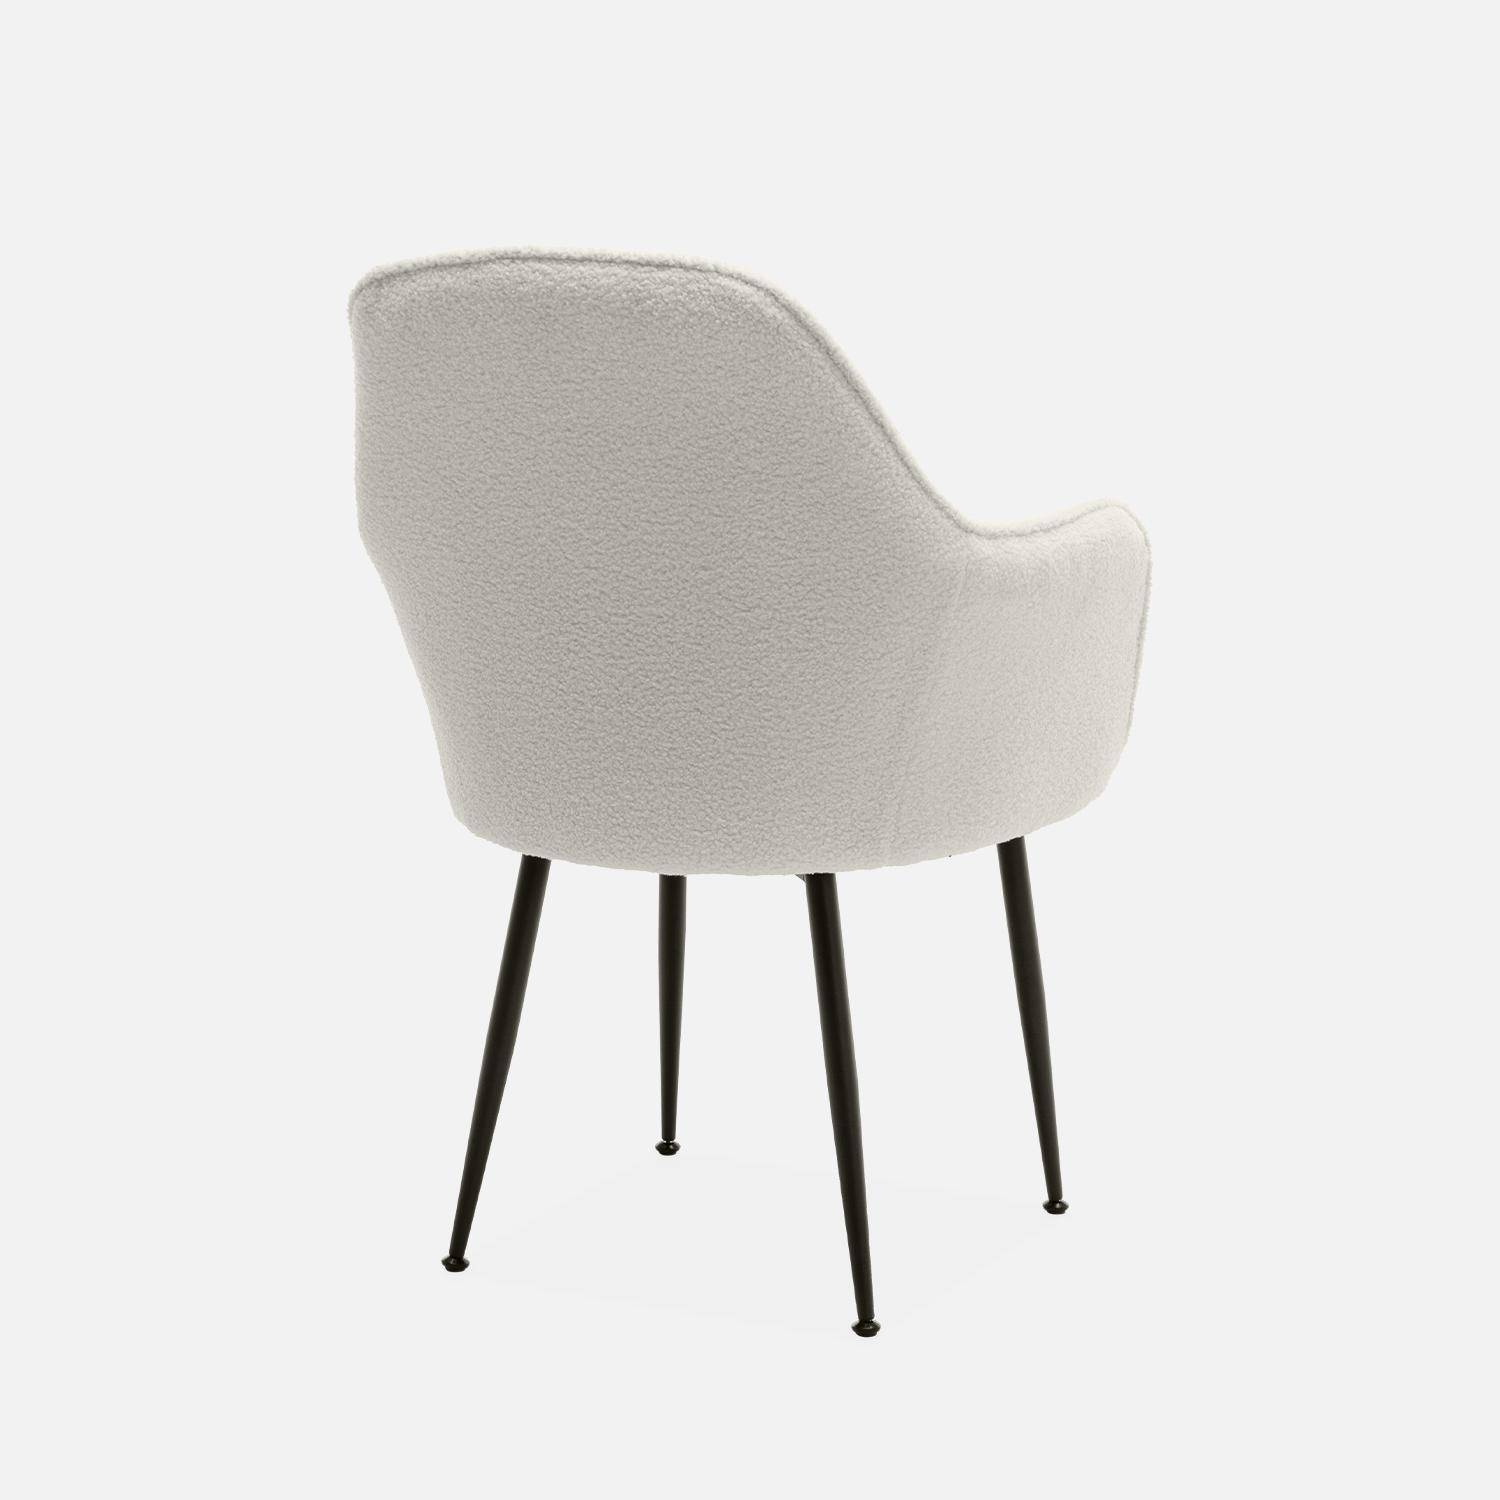 Boucle armchair with metal legs, 58x58x85cm - Shella Boucle - White,sweeek,Photo5